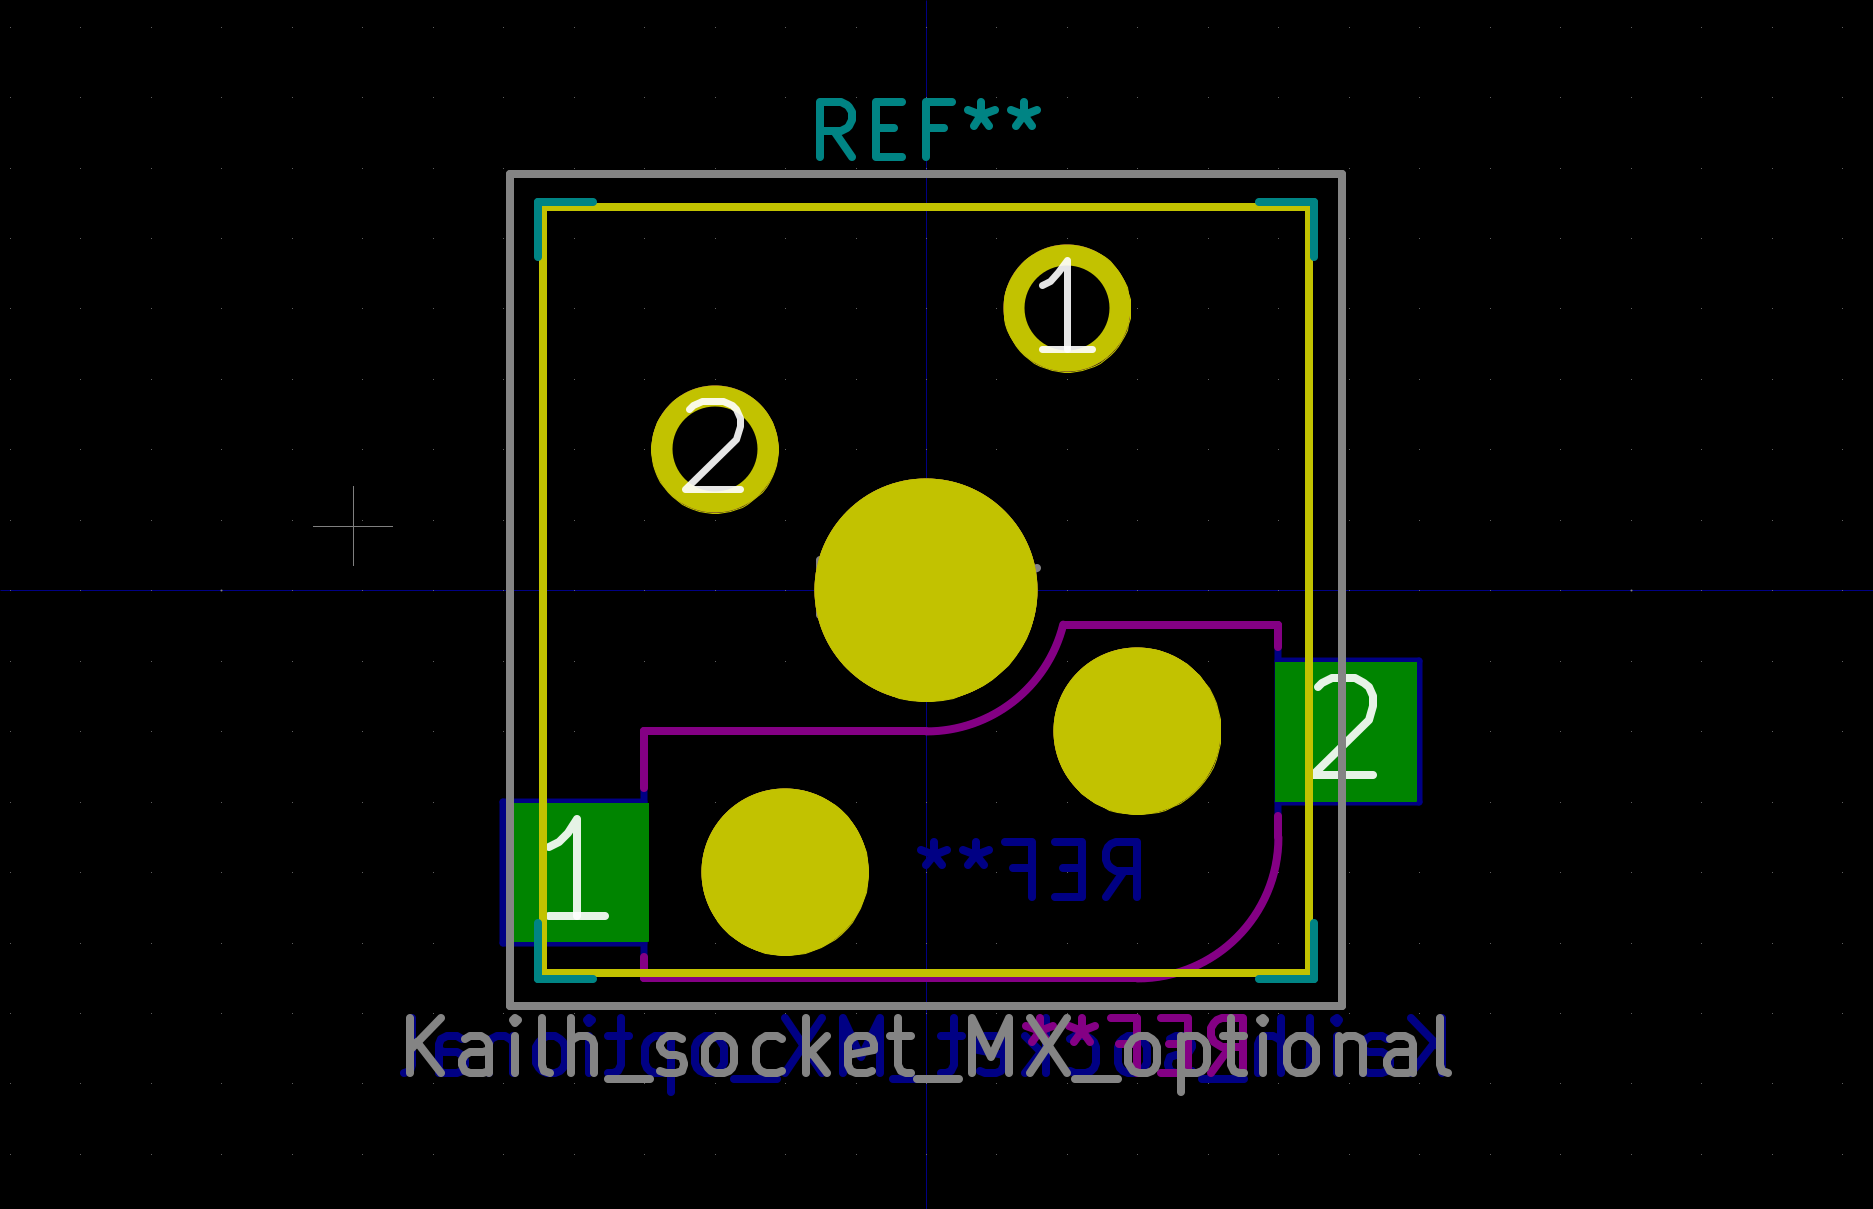 Kailh_socket_MX_optional_platemount